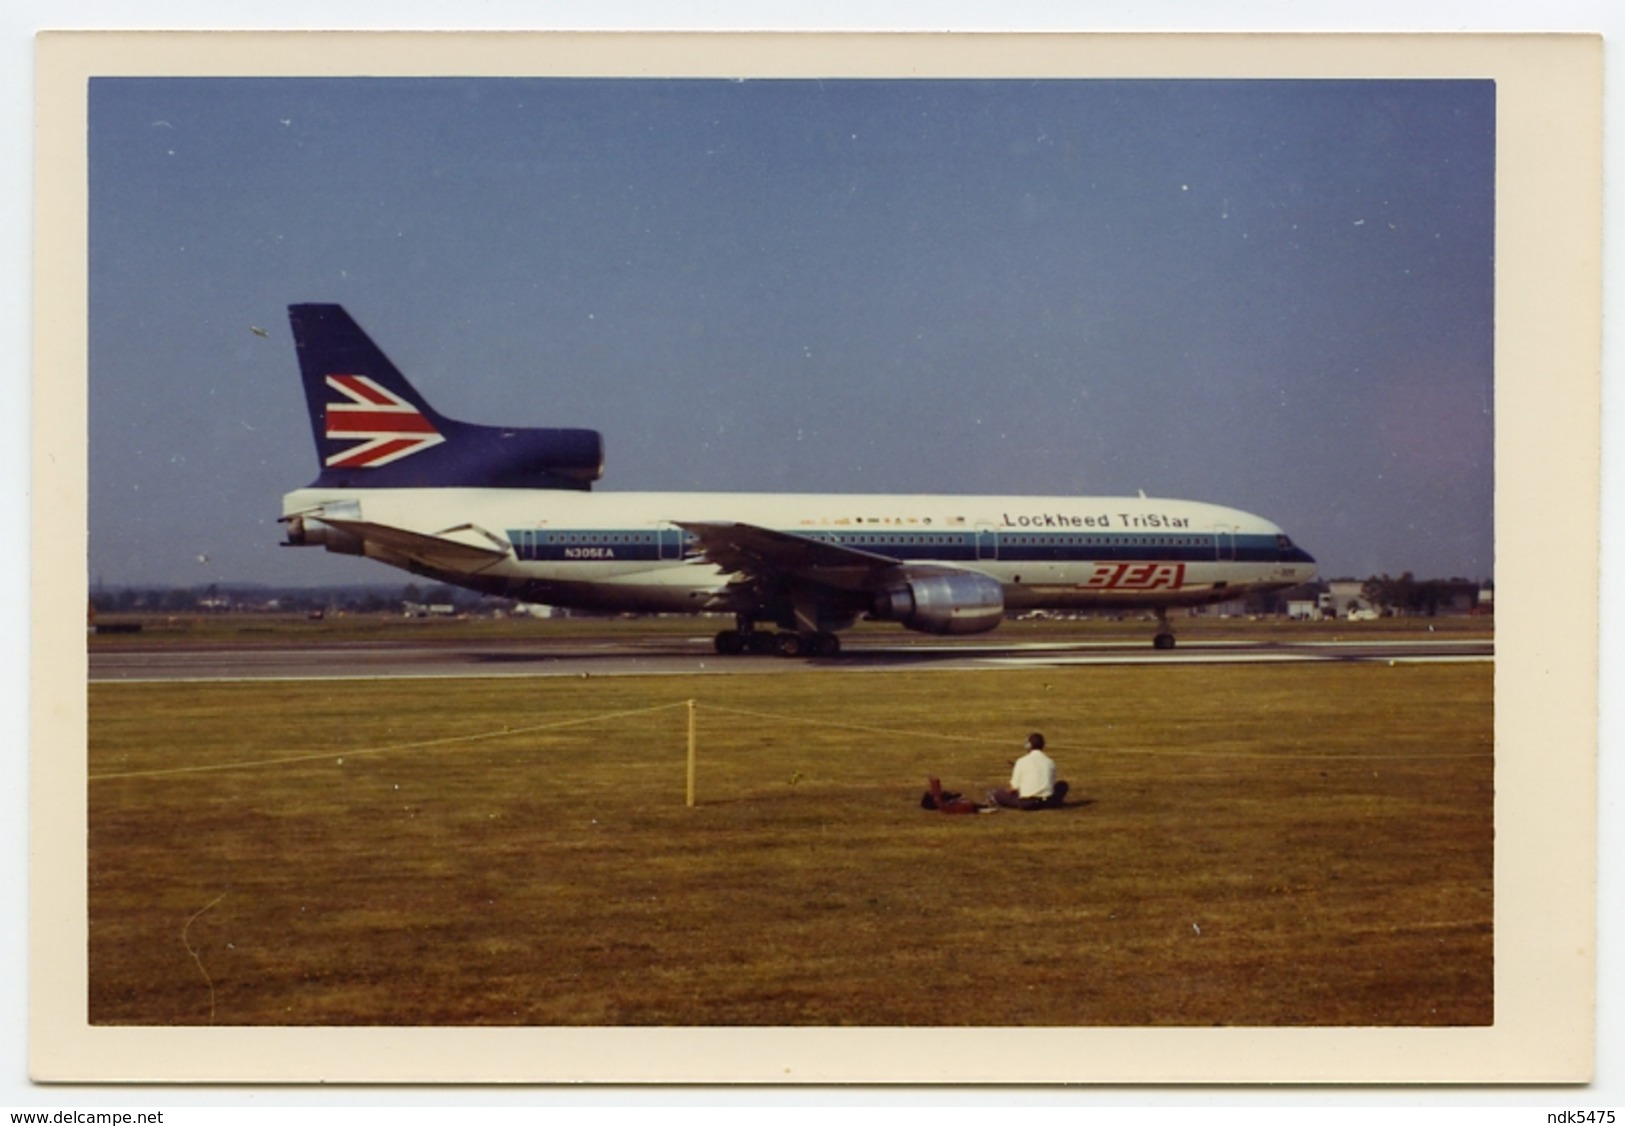 PHOTO : LOCKHEED TRISTAR IN BEA / EASTERN LIVERY - FARNBOROUGH AIR SHOW, 1972 - Luftfahrt